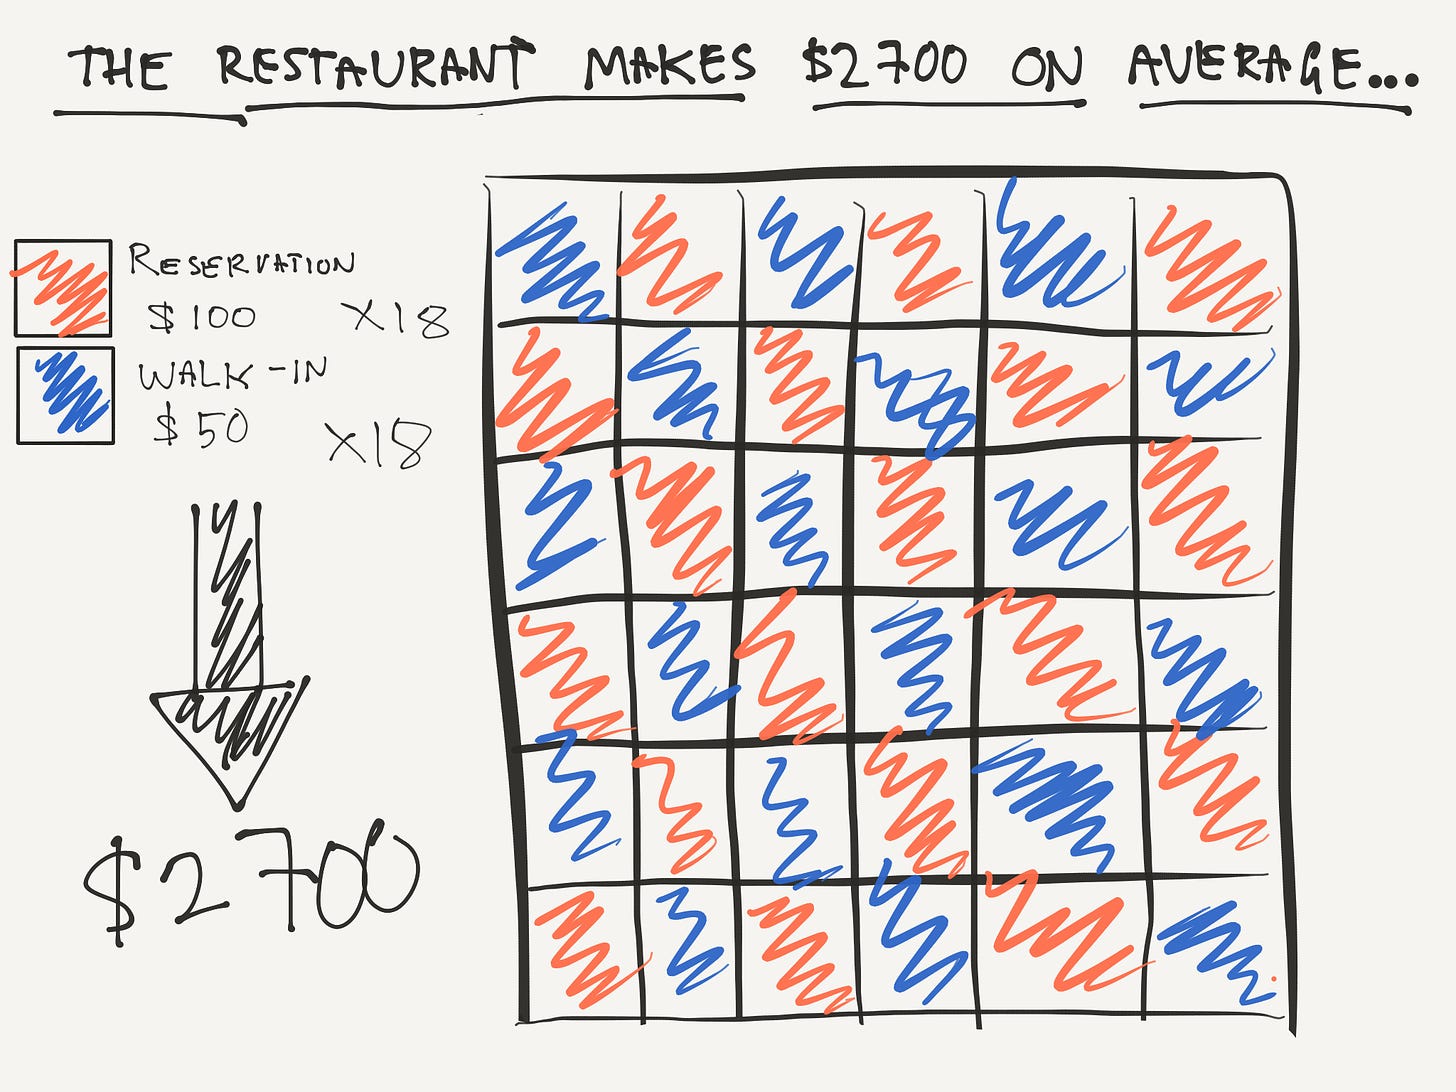 hypothetical restaurant earnings